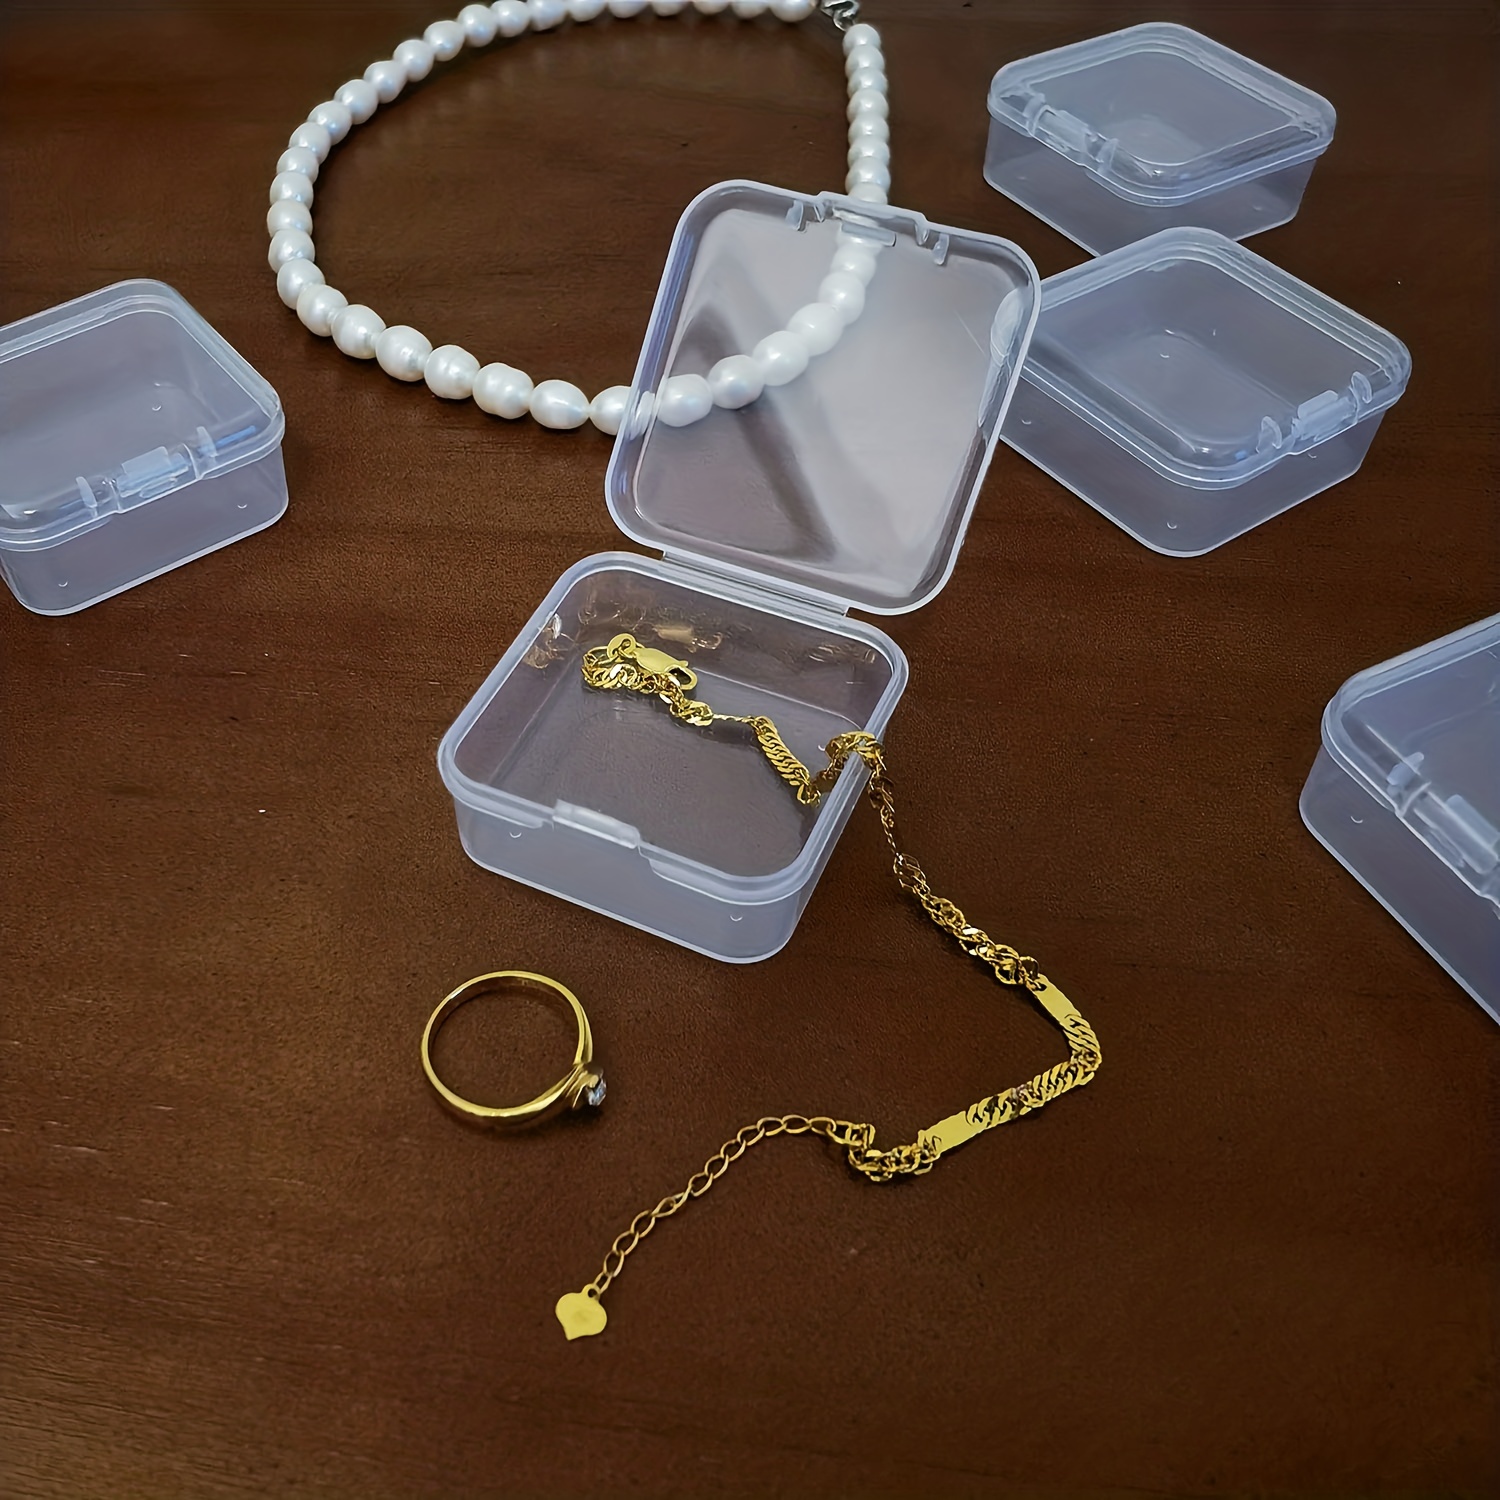 4 Pieces Plastic Jewelry Box, Clear Plastic Jewelry Box, Sort